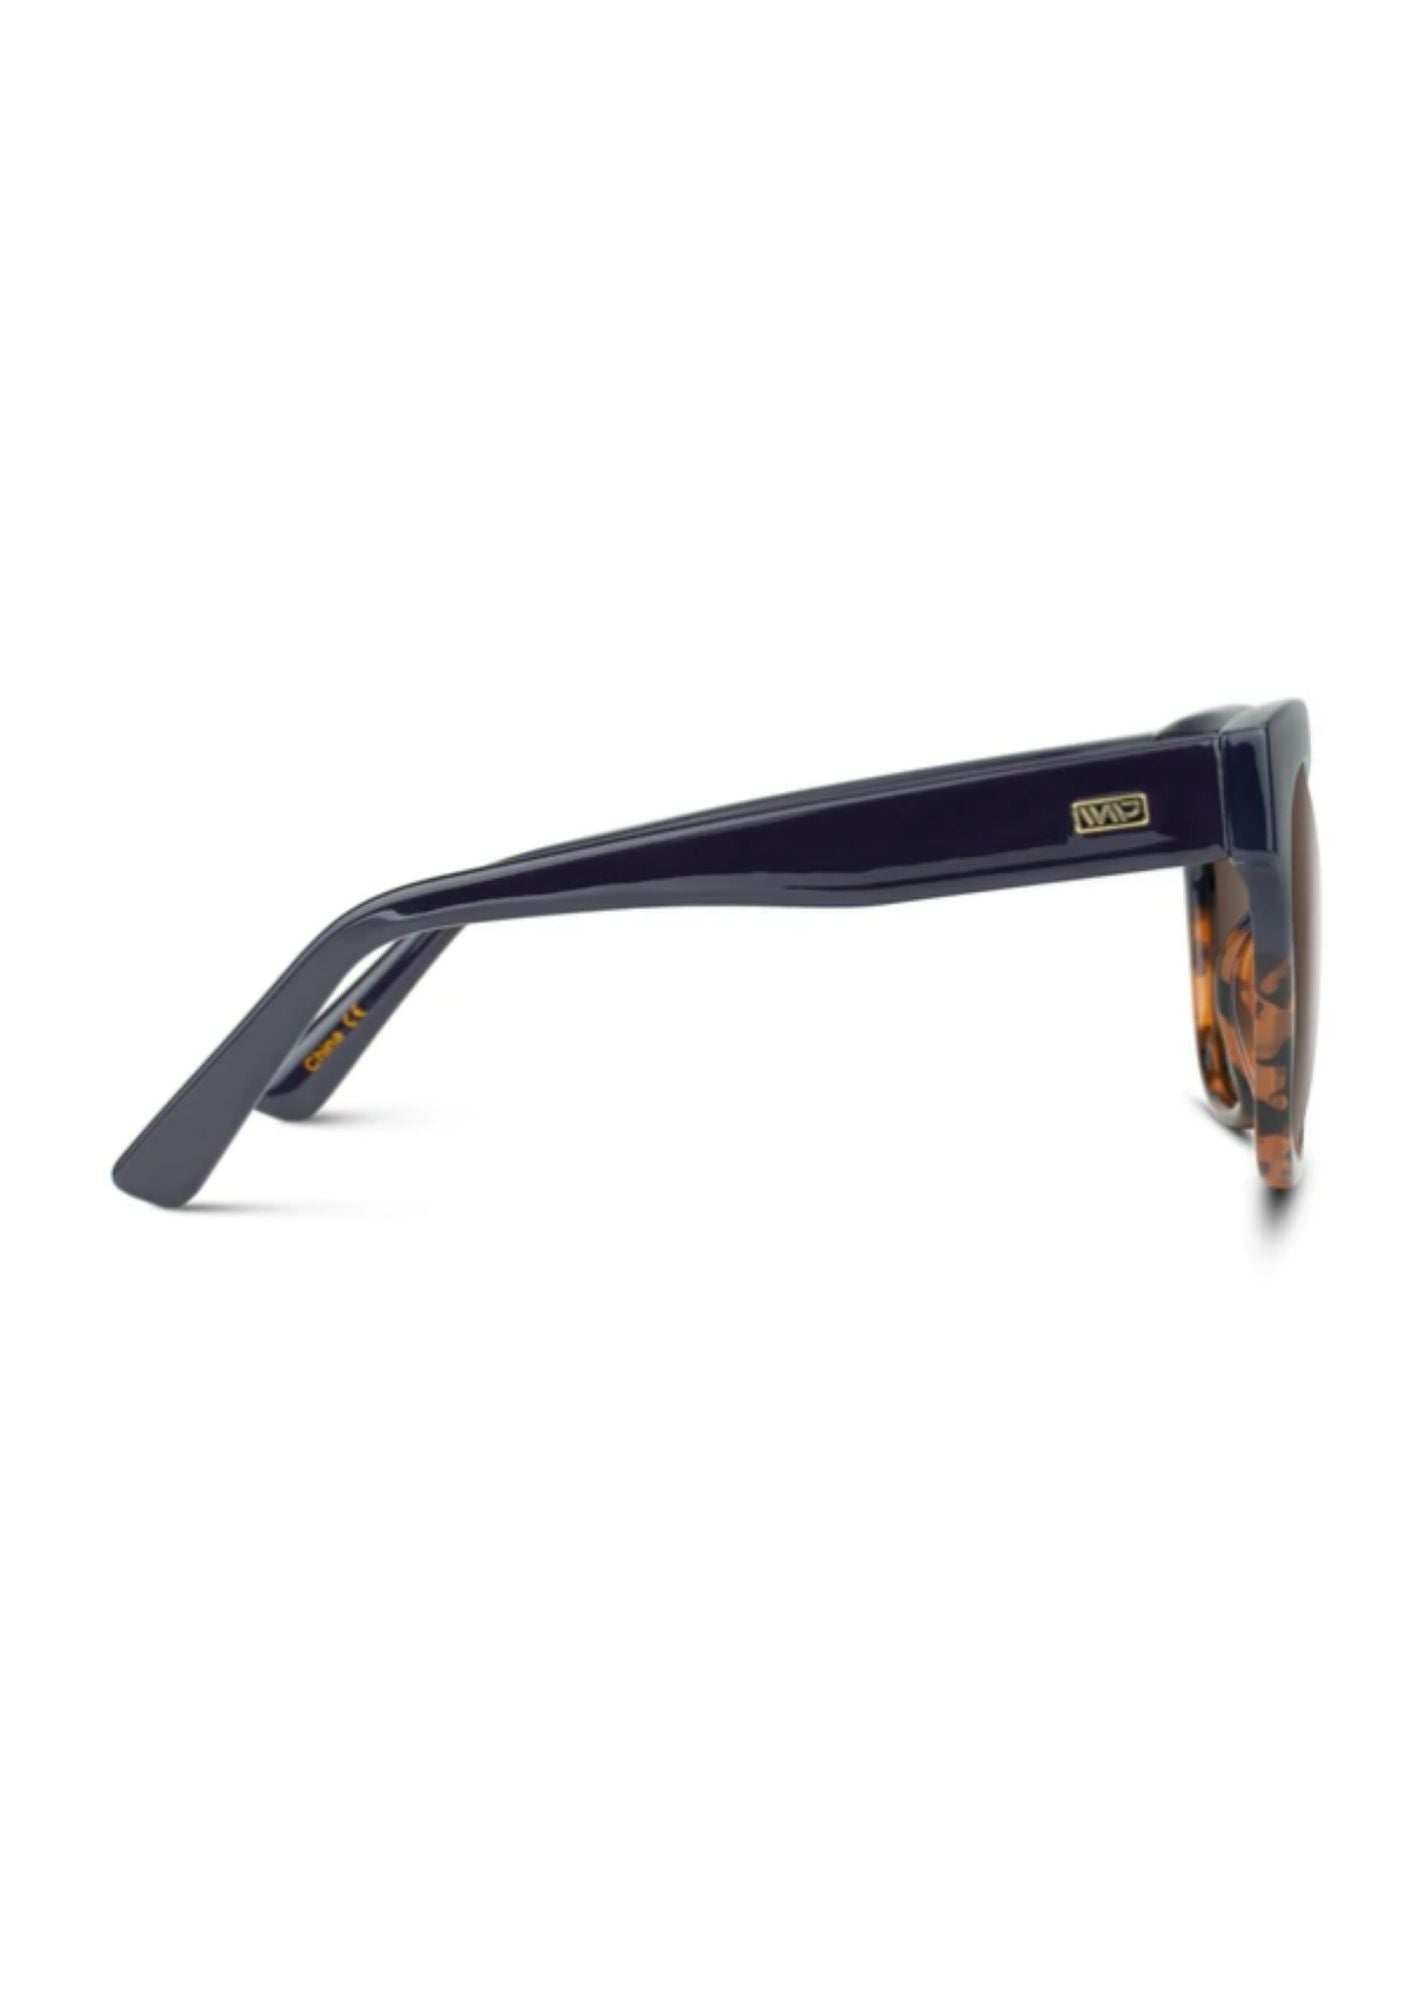 Charlotte Navy Blue Sunglasses Accessories WearMe Pro